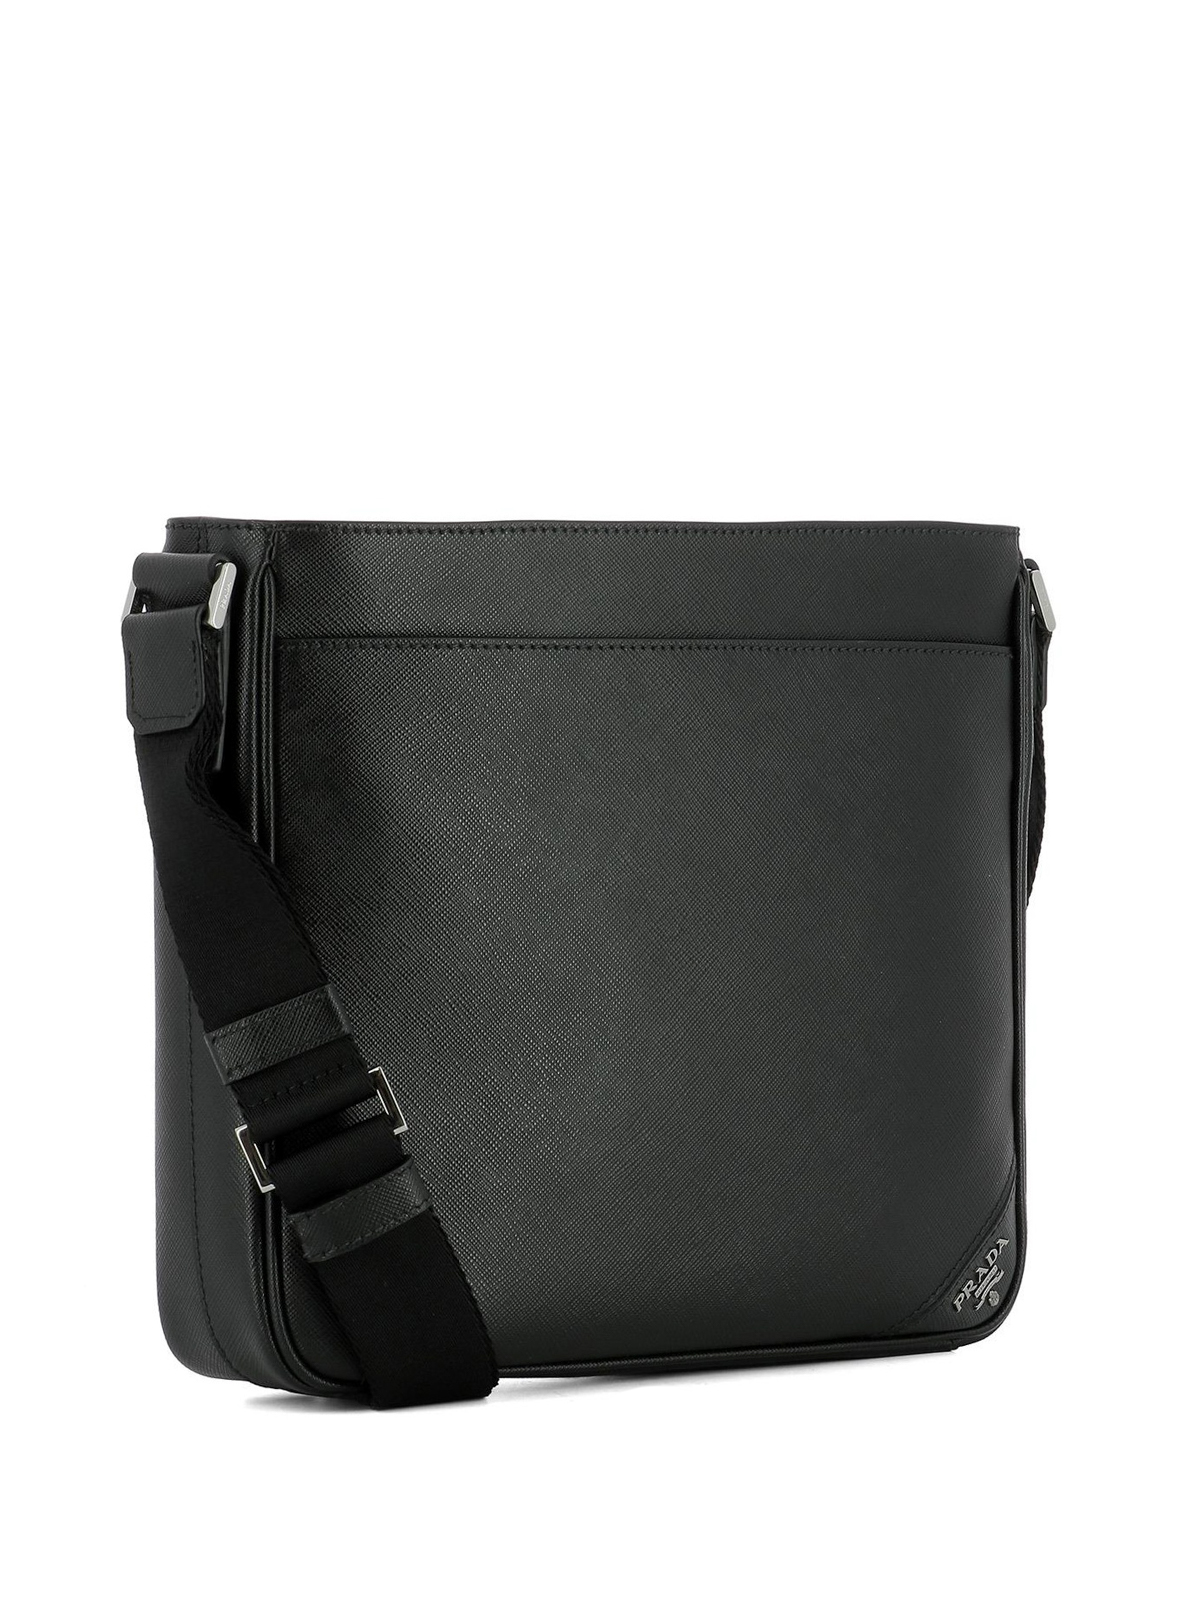 Prada Men's Saffiano Leather Messenger Bag with Pouch